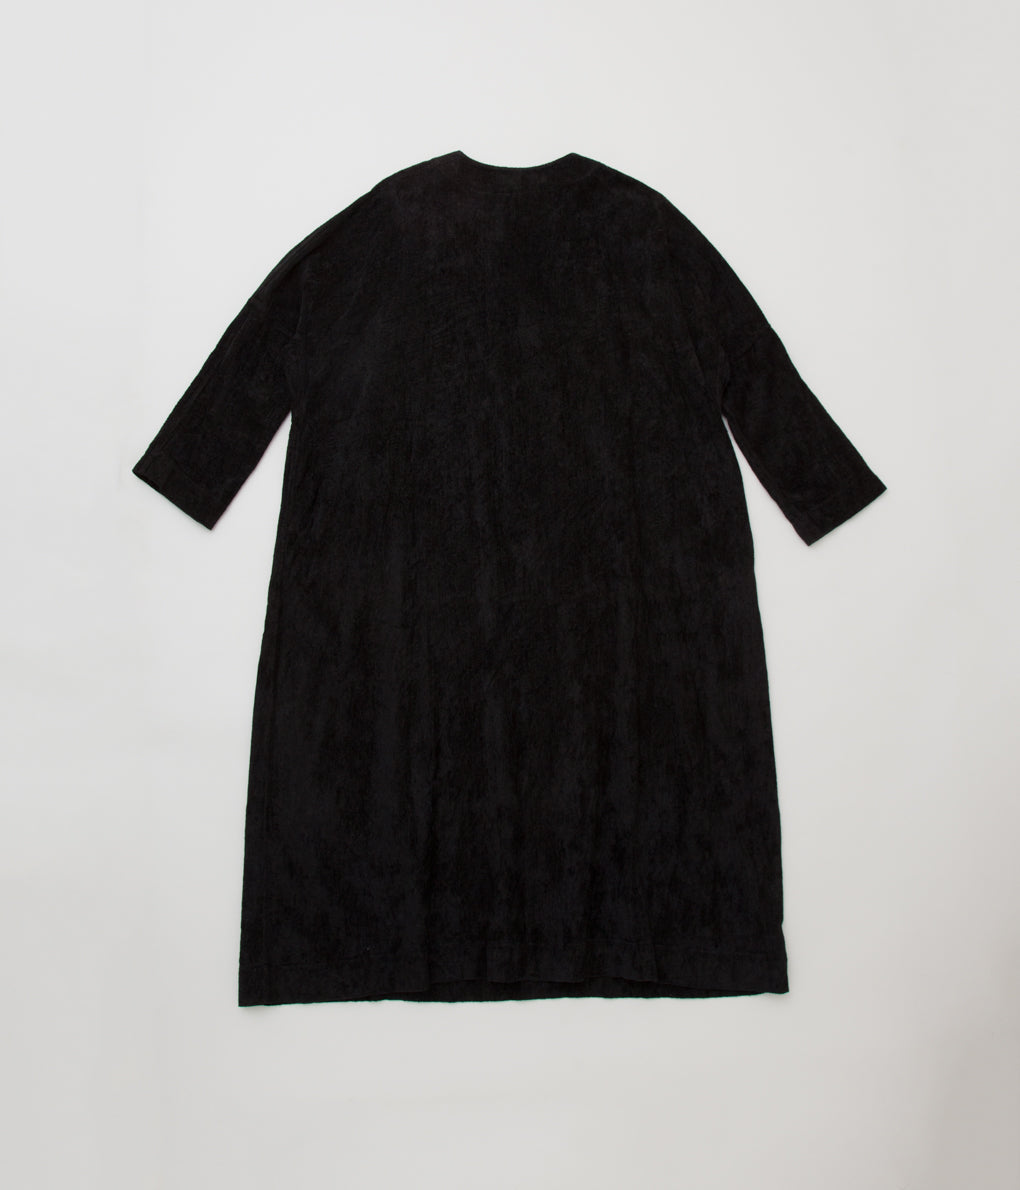 BEAUGAN "VELVET SACK DRESS" (INDIGO MUDDYED BLACK)